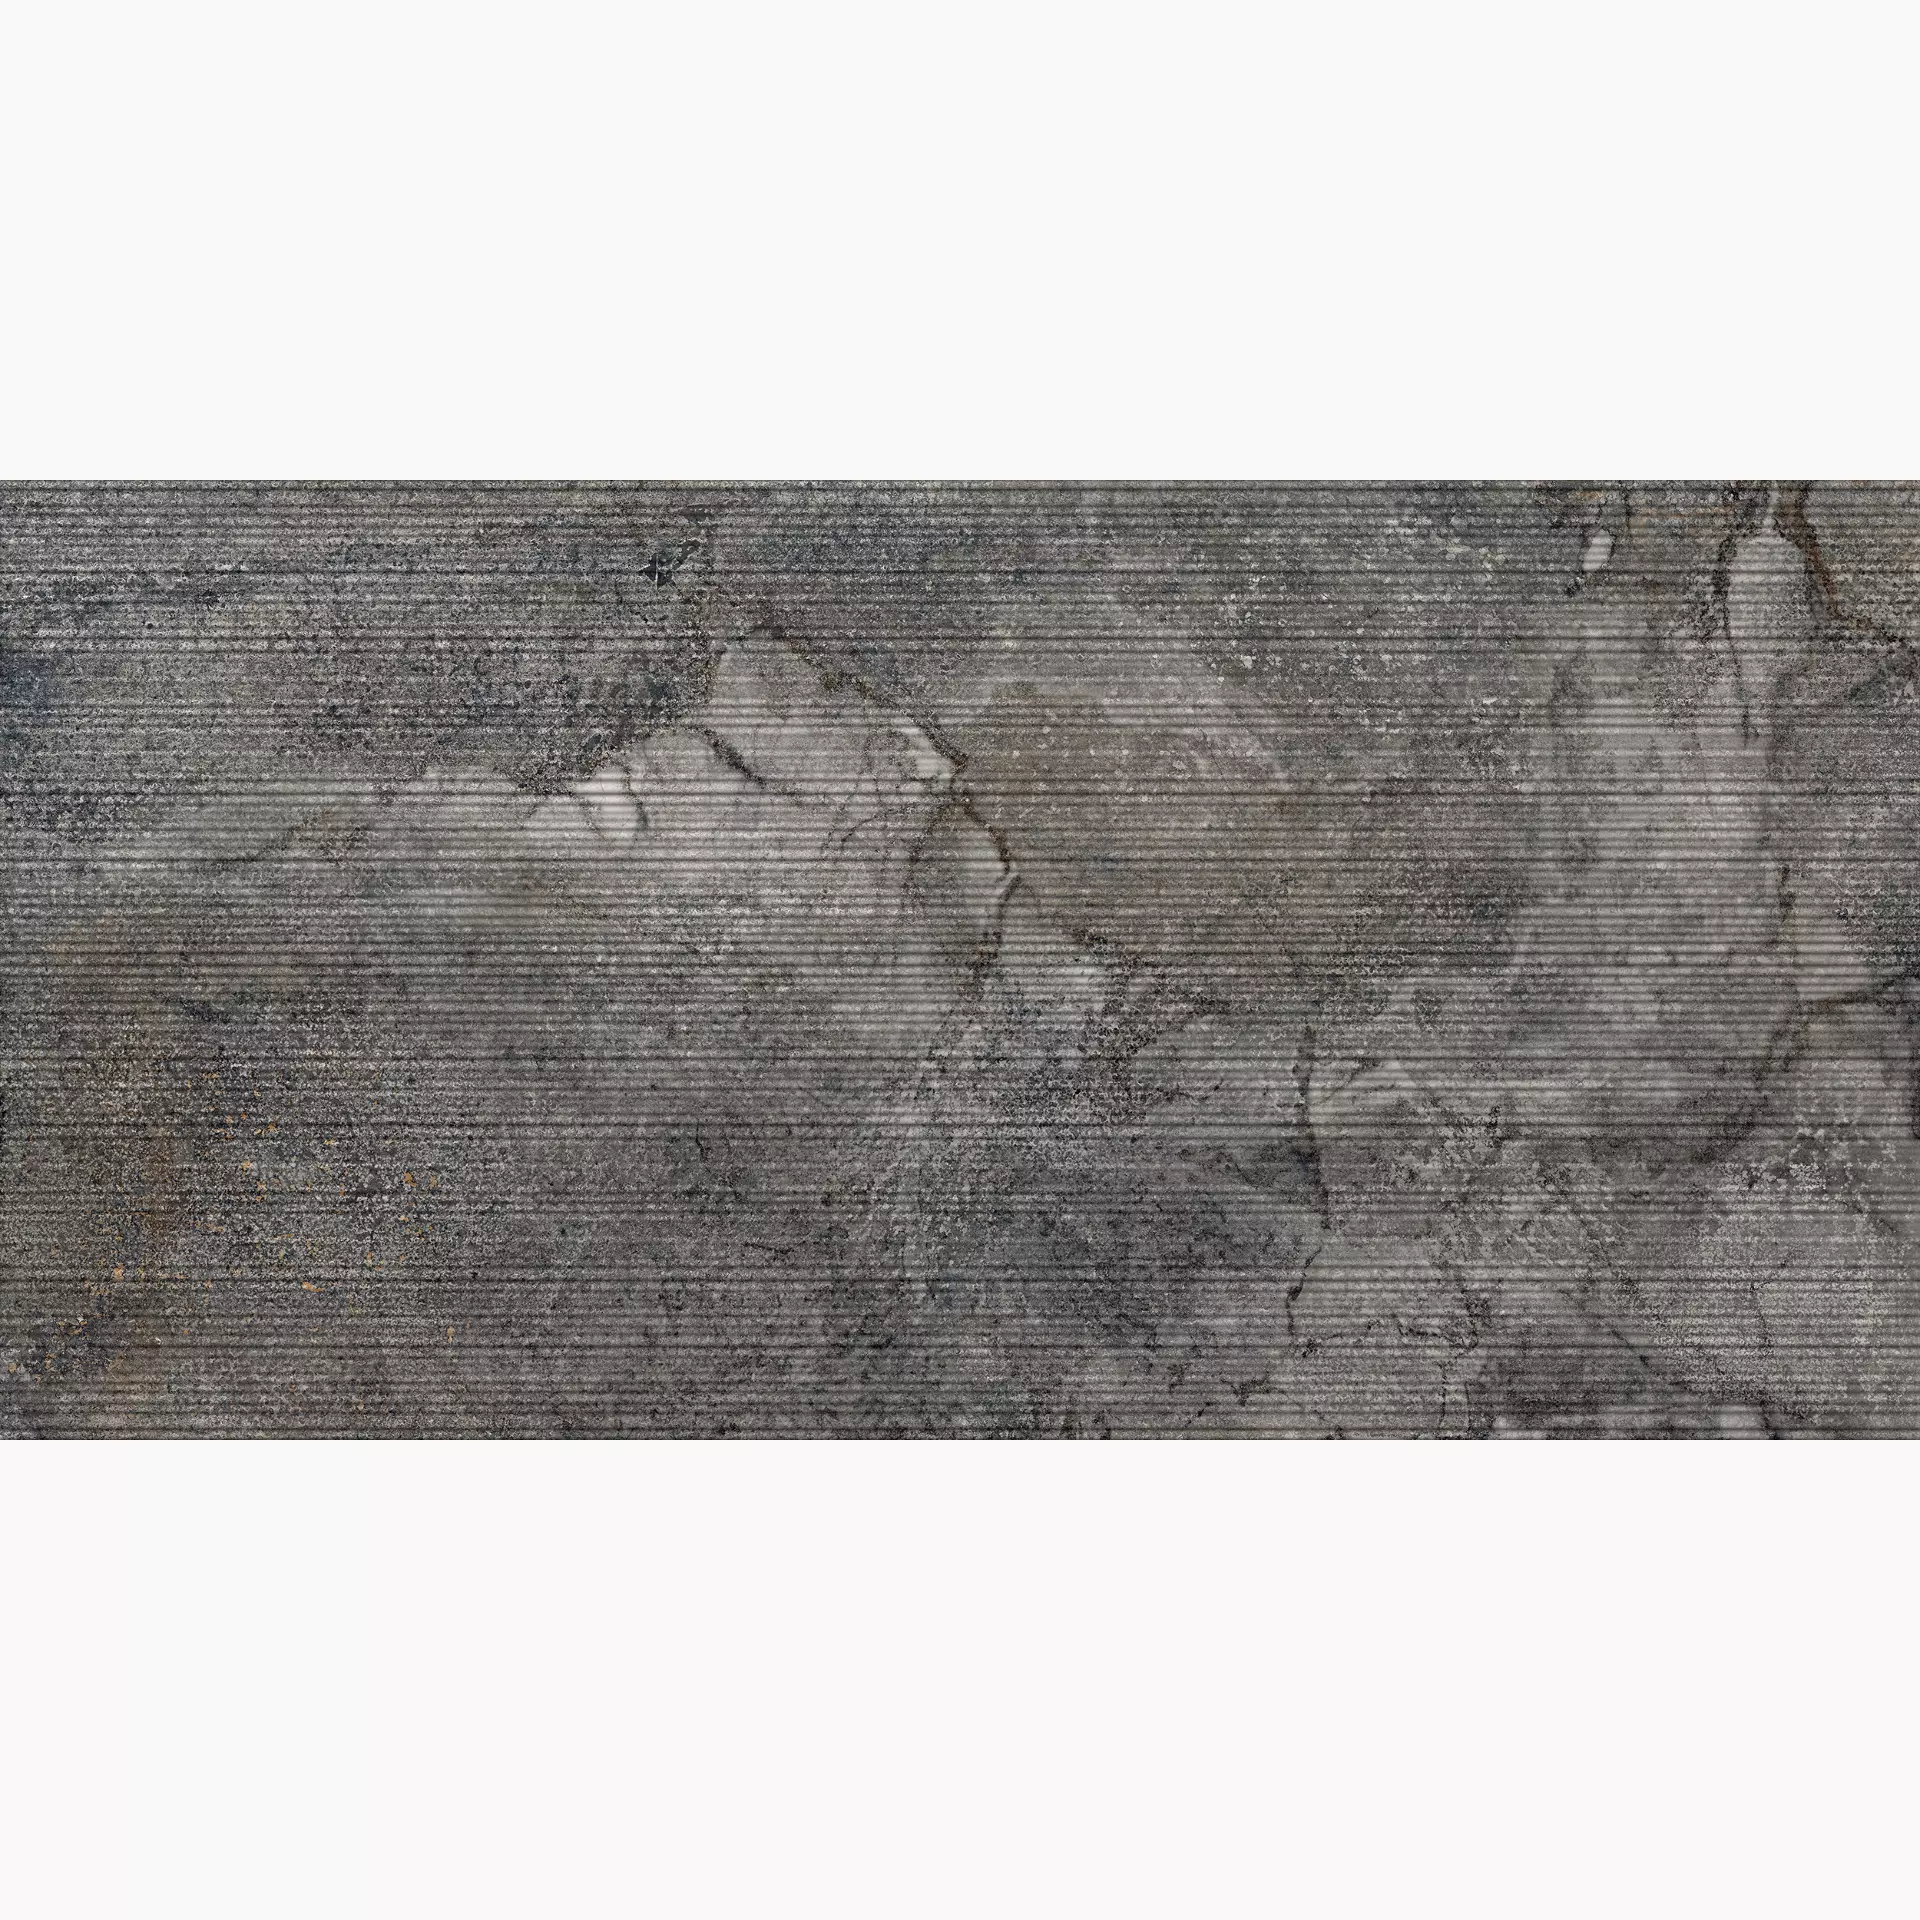 Fondovalle Upper Elephant Grey Natural Decor Stick UPP099 60x120cm rectified 8,5mm